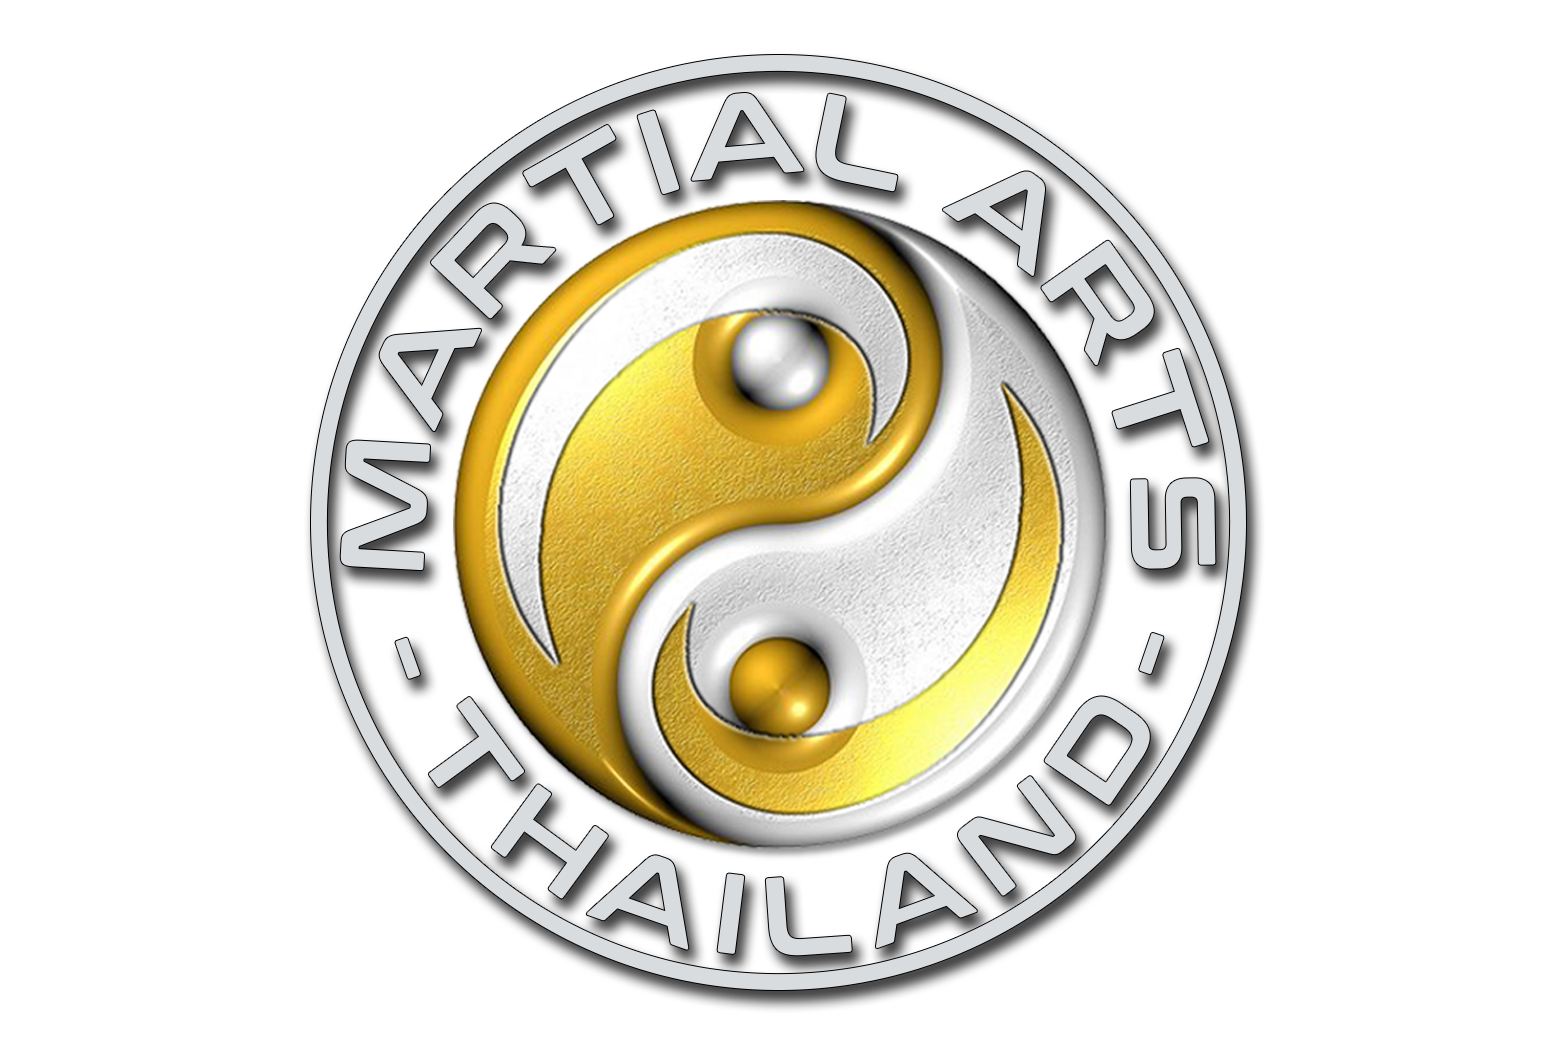 Martial Arts Thailand